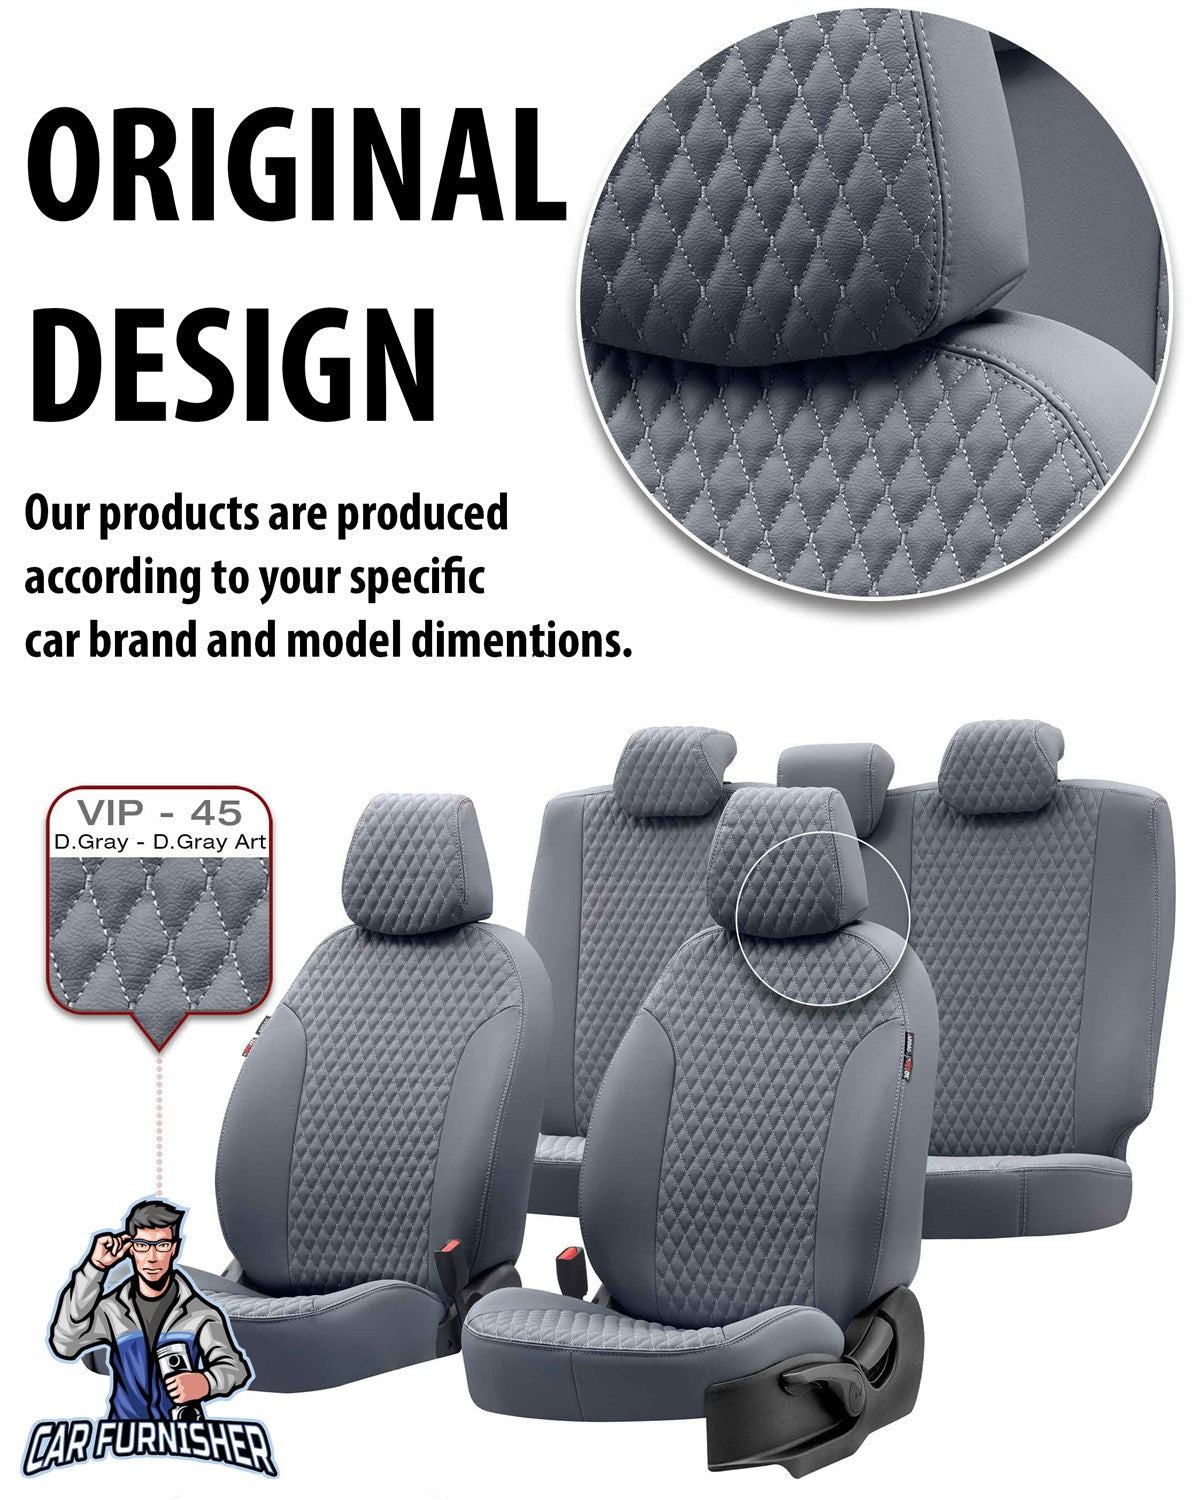 Bmw X5 Car Seat Cover 2000-2006 E53 Custom Amsterdam Design Smoked Black Full Set (5 Seats + Handrest) Full Leather